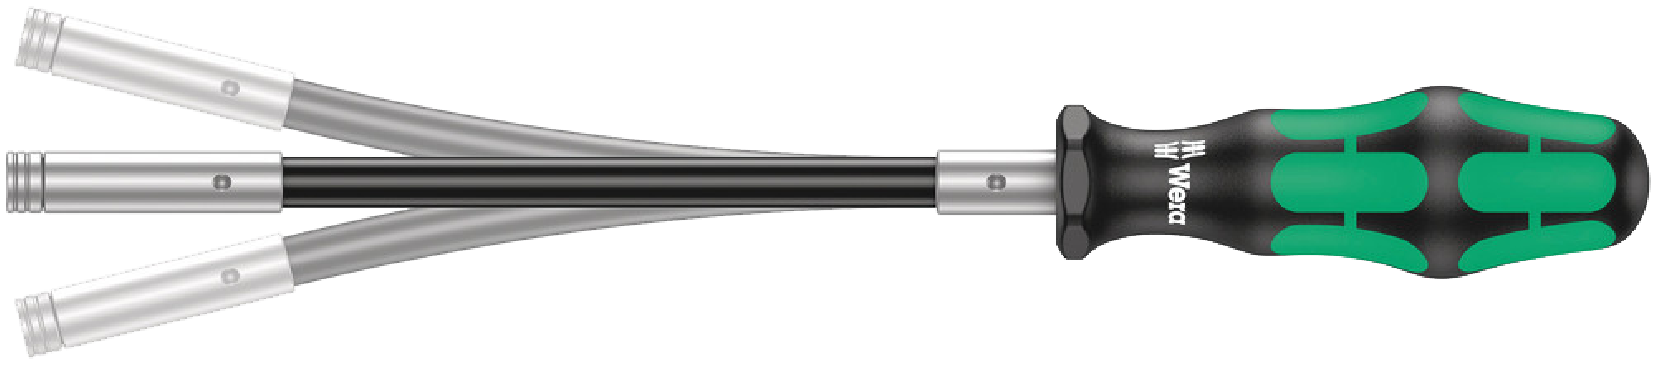 393 S Porte-embouts extra slim avec lame flexible, 1/4" x 173.5 mm  - 05028161001 - Wera Tools